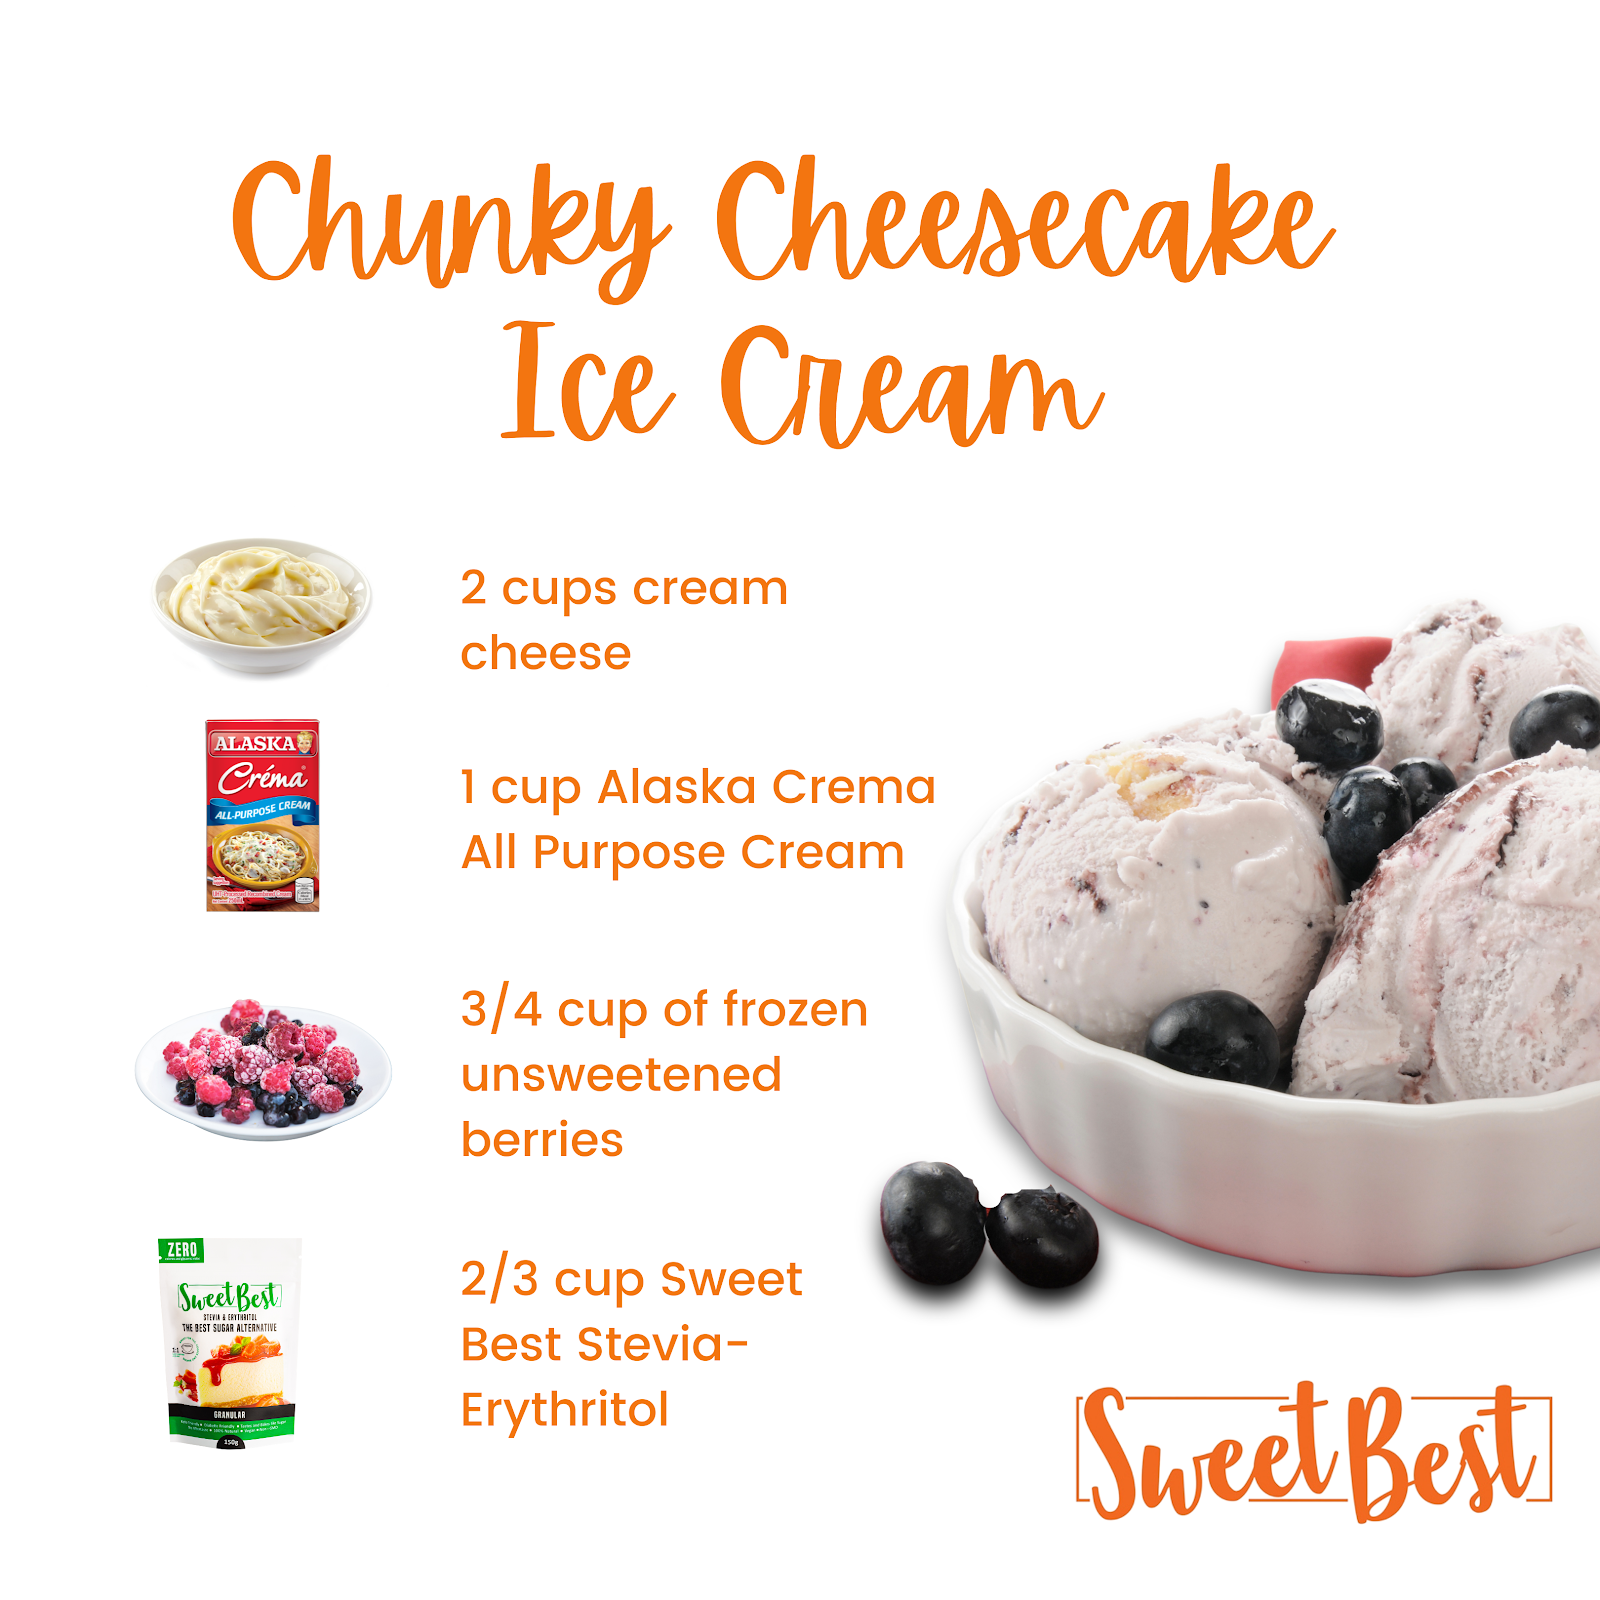 Chunky Cheesecake Ice Cream